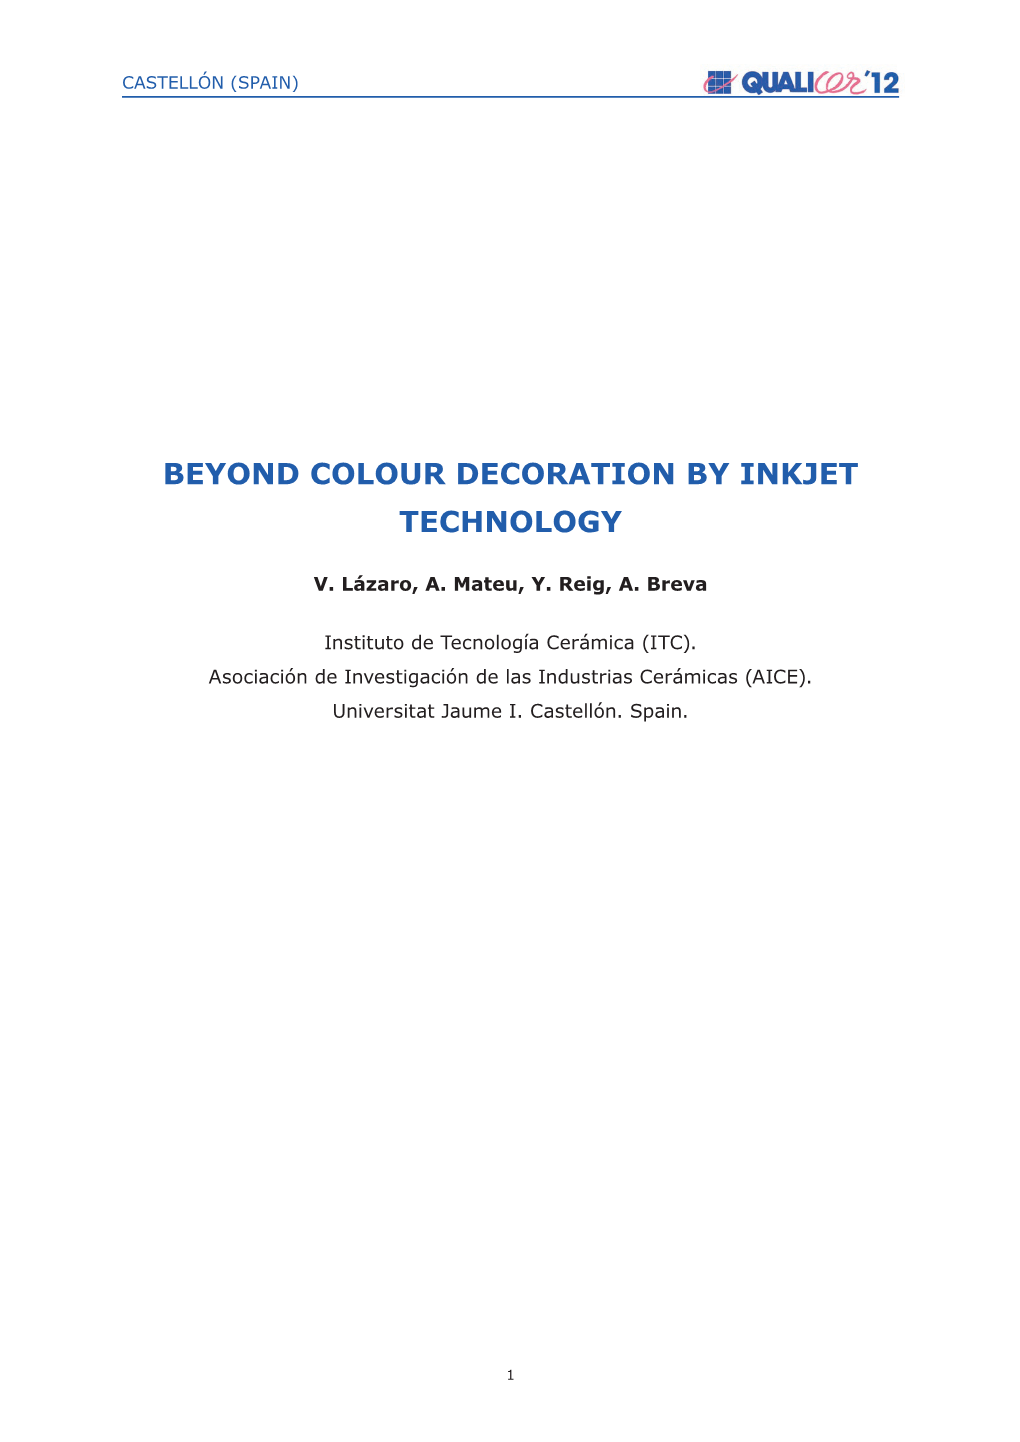 Beyond Colour Decoration by INKJET Technology